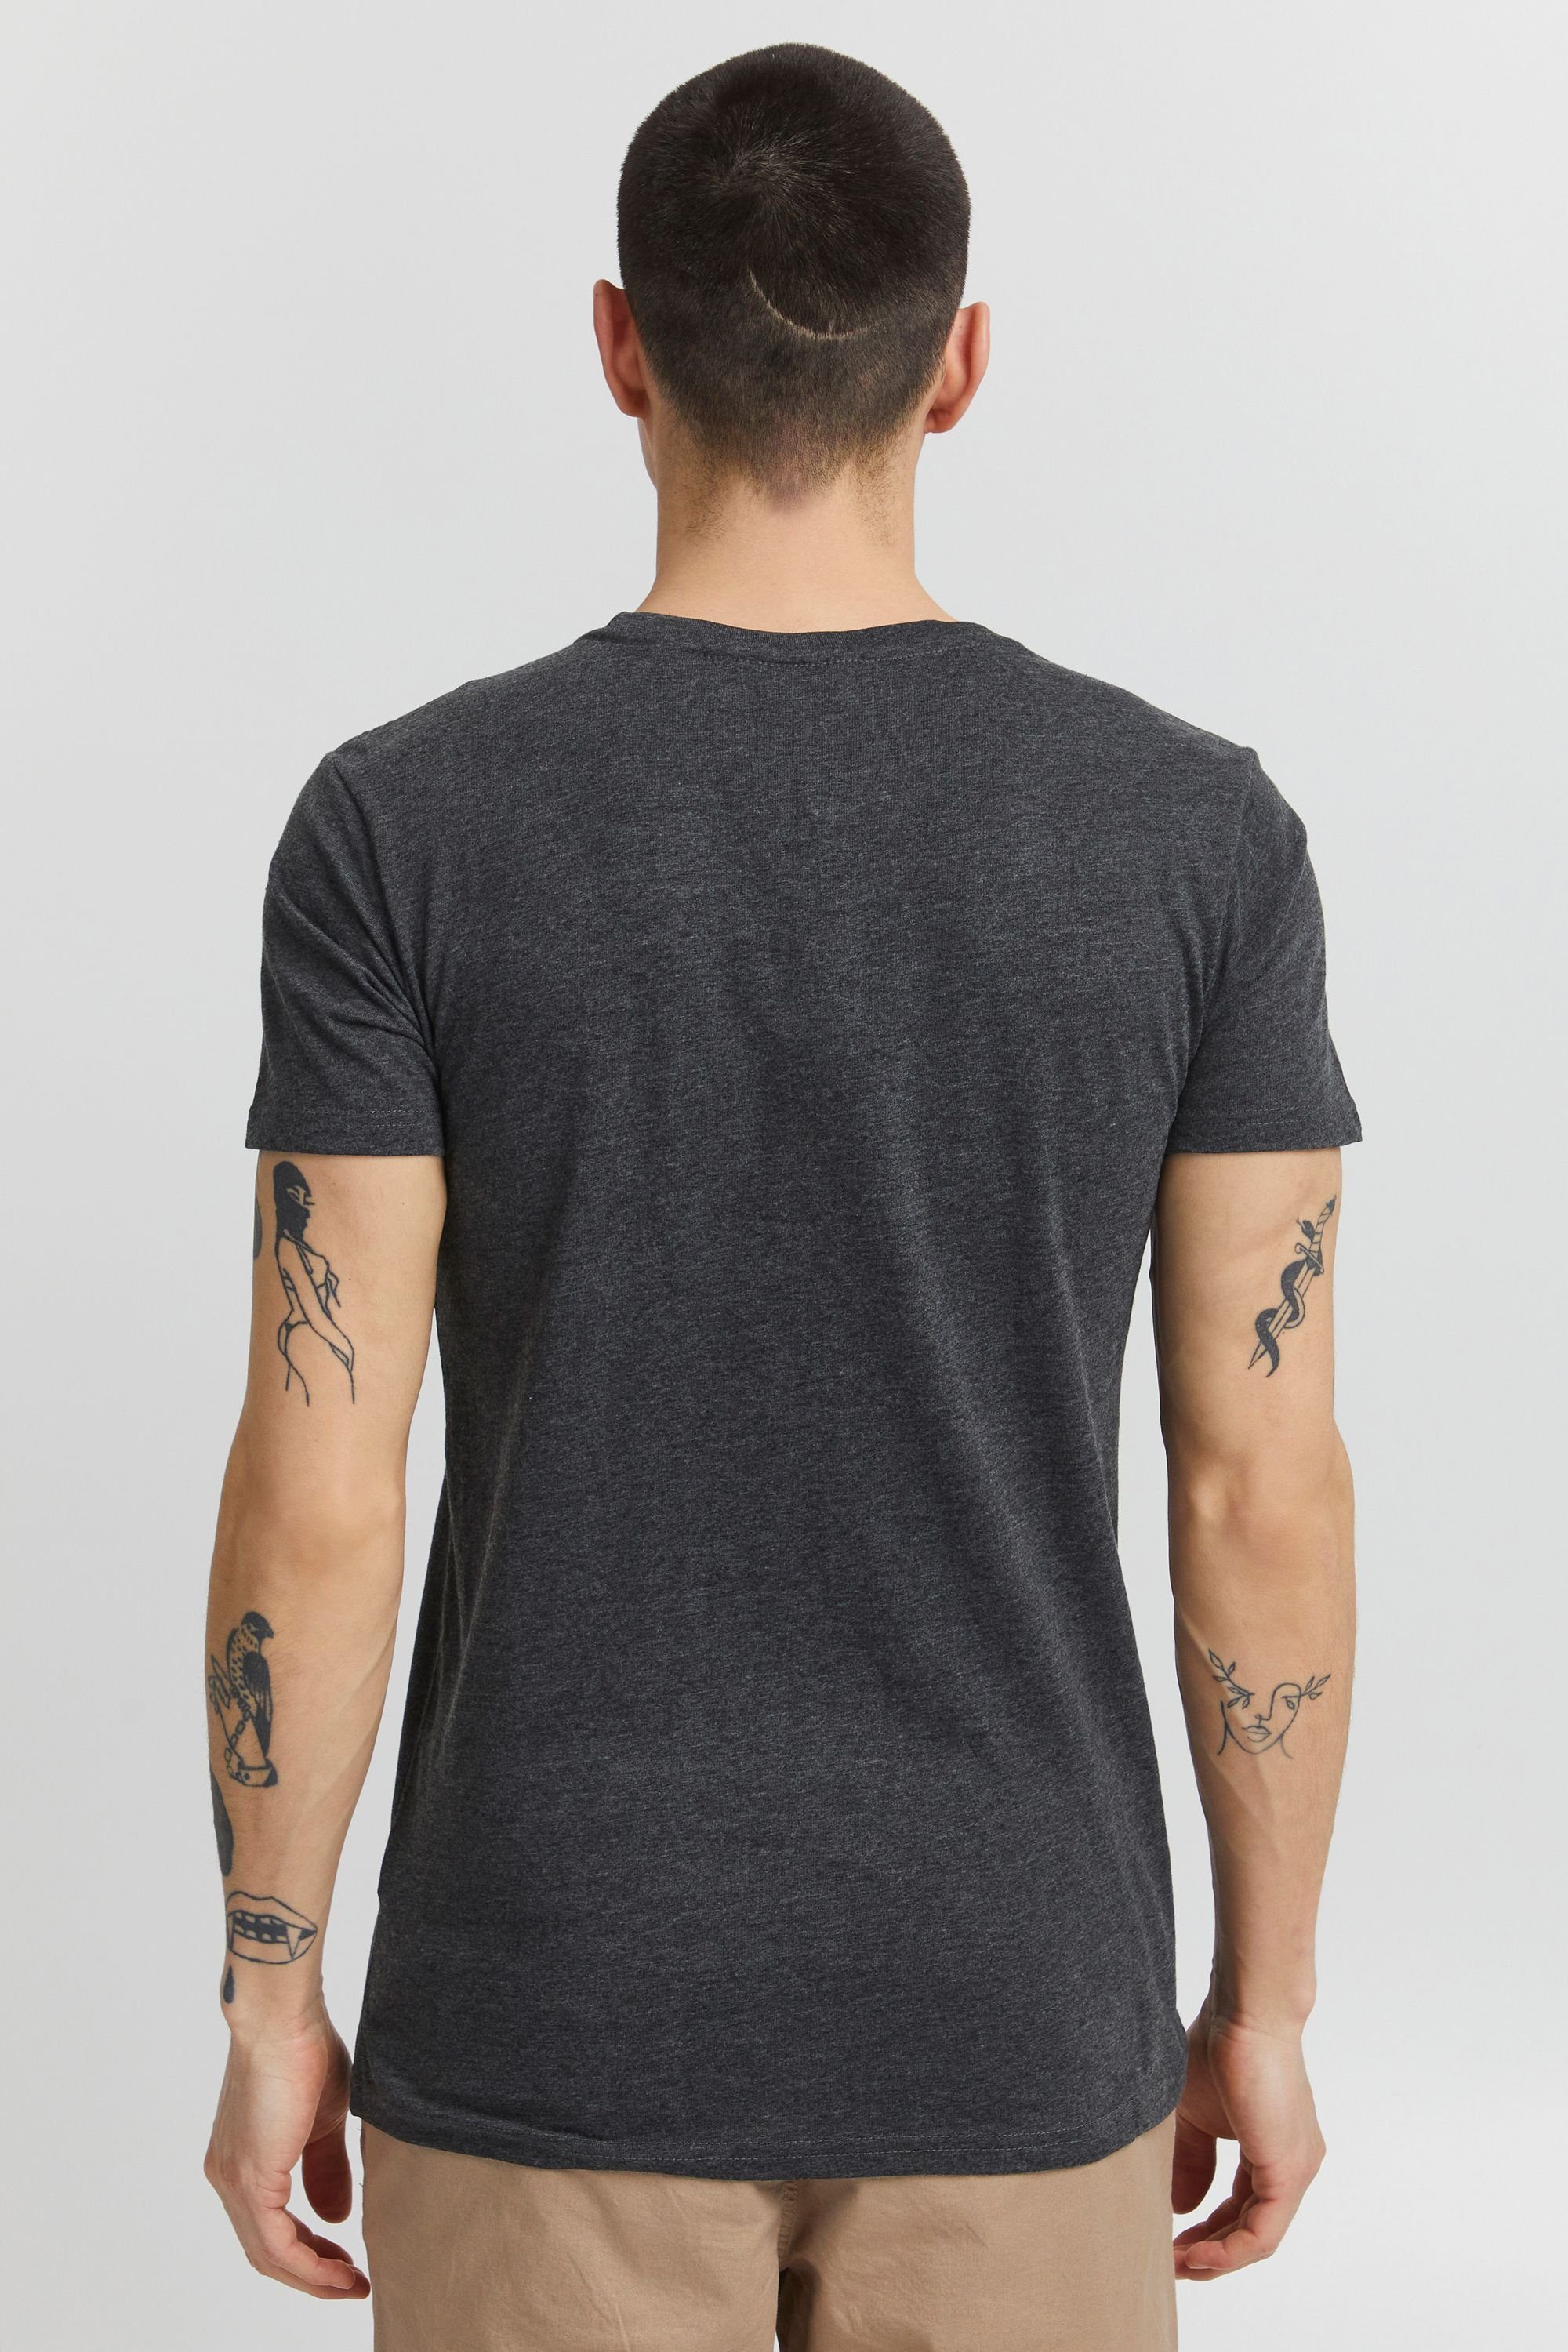 Melange Dark !Solid (1940071) Print-Shirt Grey SDPedro